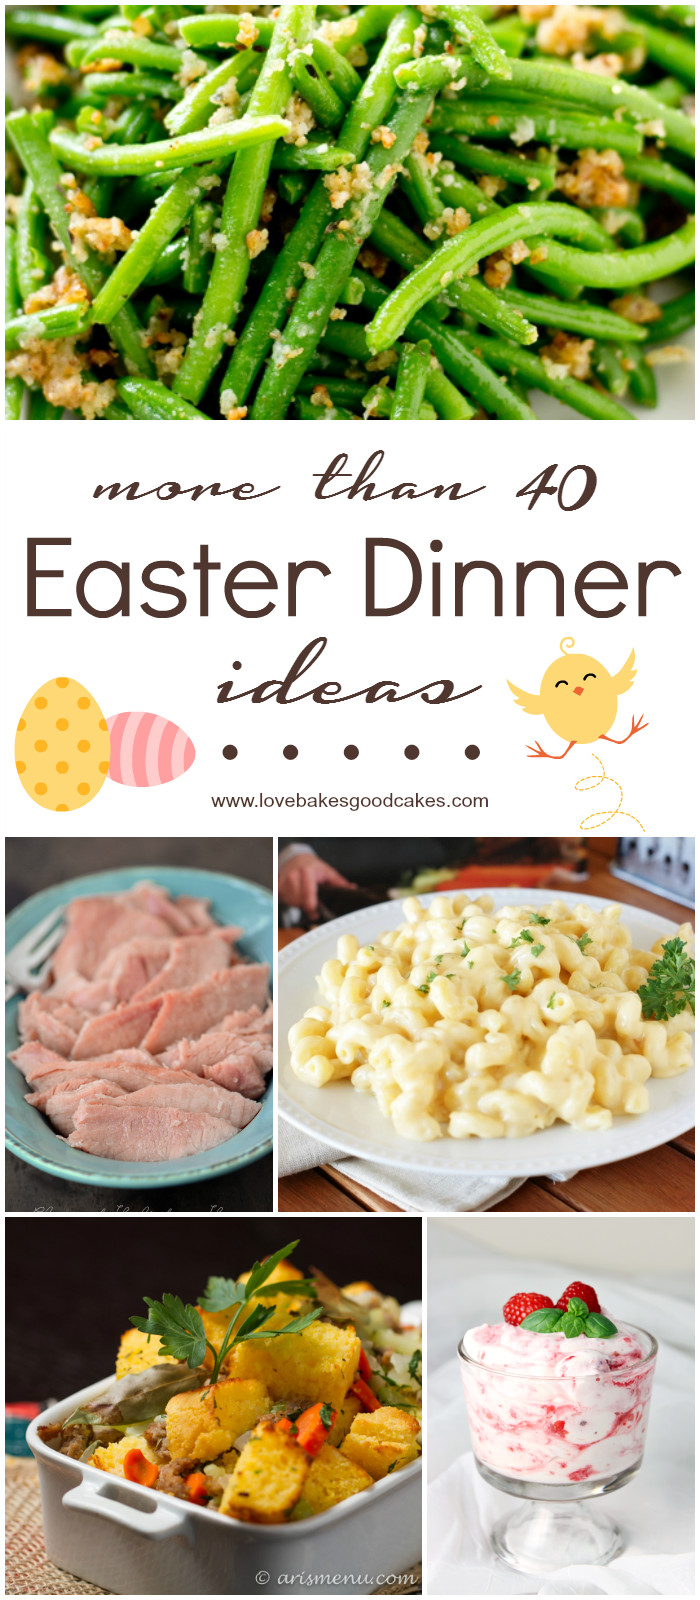 Easter Dinner Menu Ideas
 More than 40 Easter Dinner Ideas